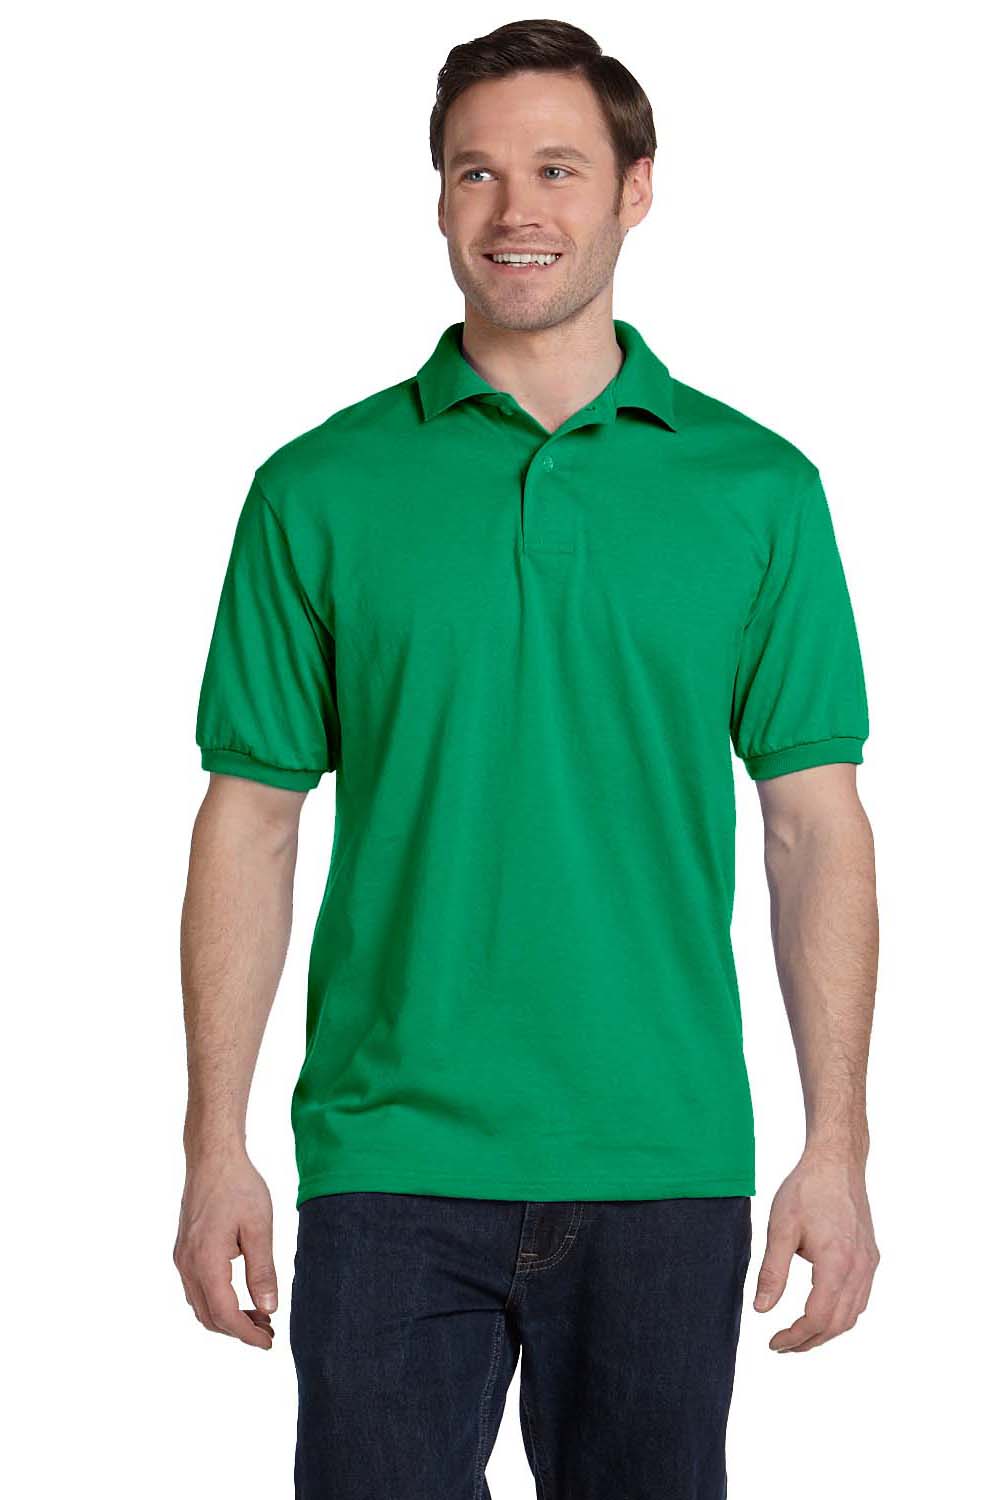 Hanes 054 Mens EcoSmart Short Sleeve Polo Shirt Kelly Green Front